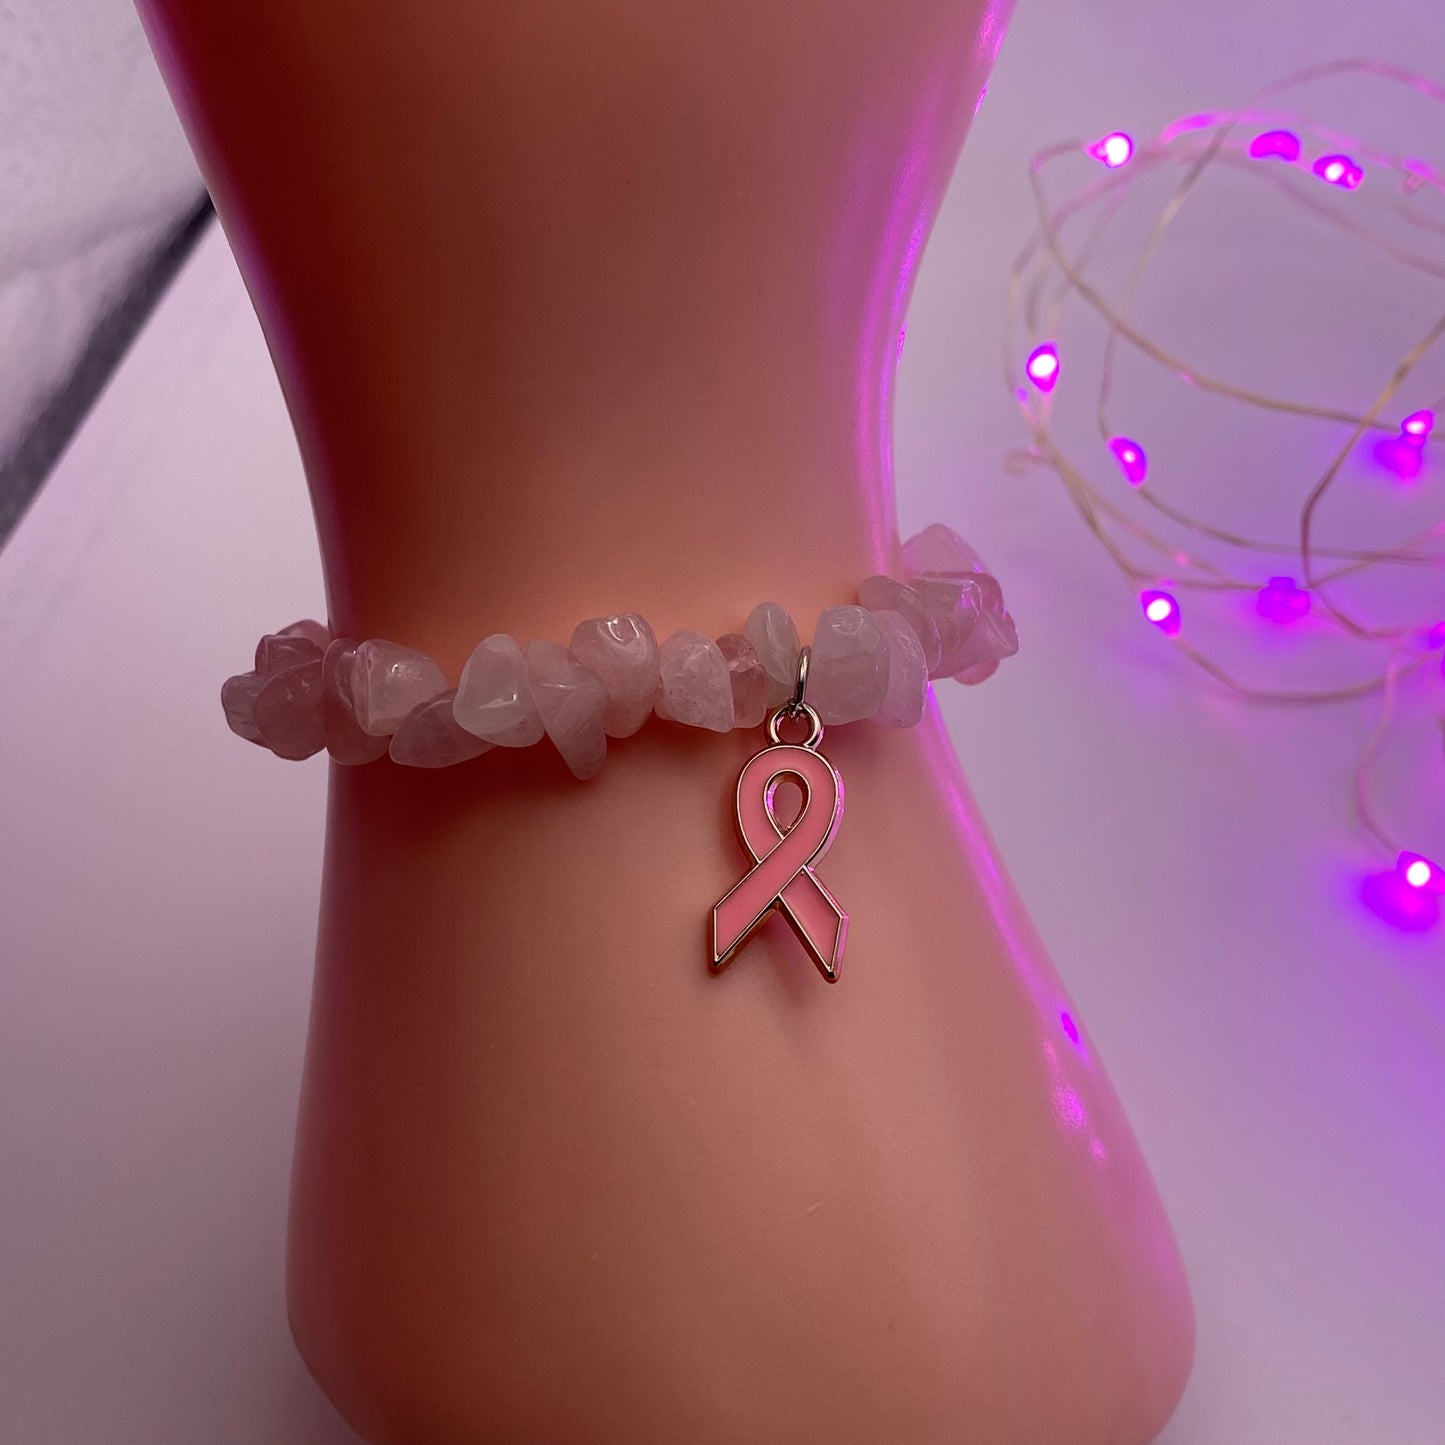 Rose Quartz Crystal Bracelet With BCA Ribbon